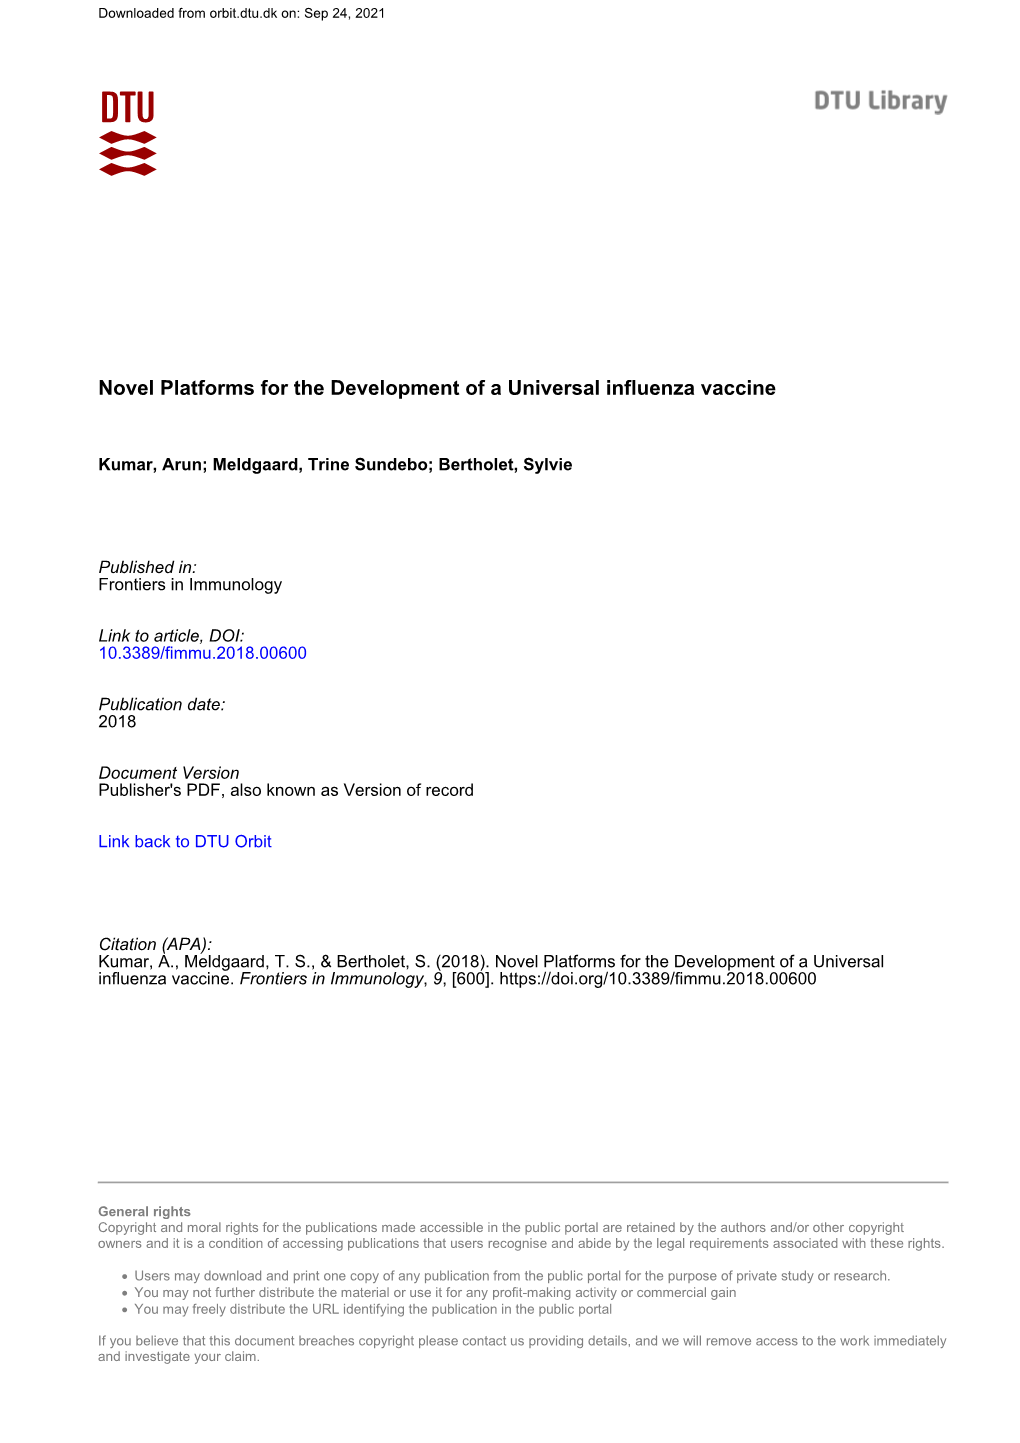 Novel Platforms for the Development of a Universal Influenza Vaccine